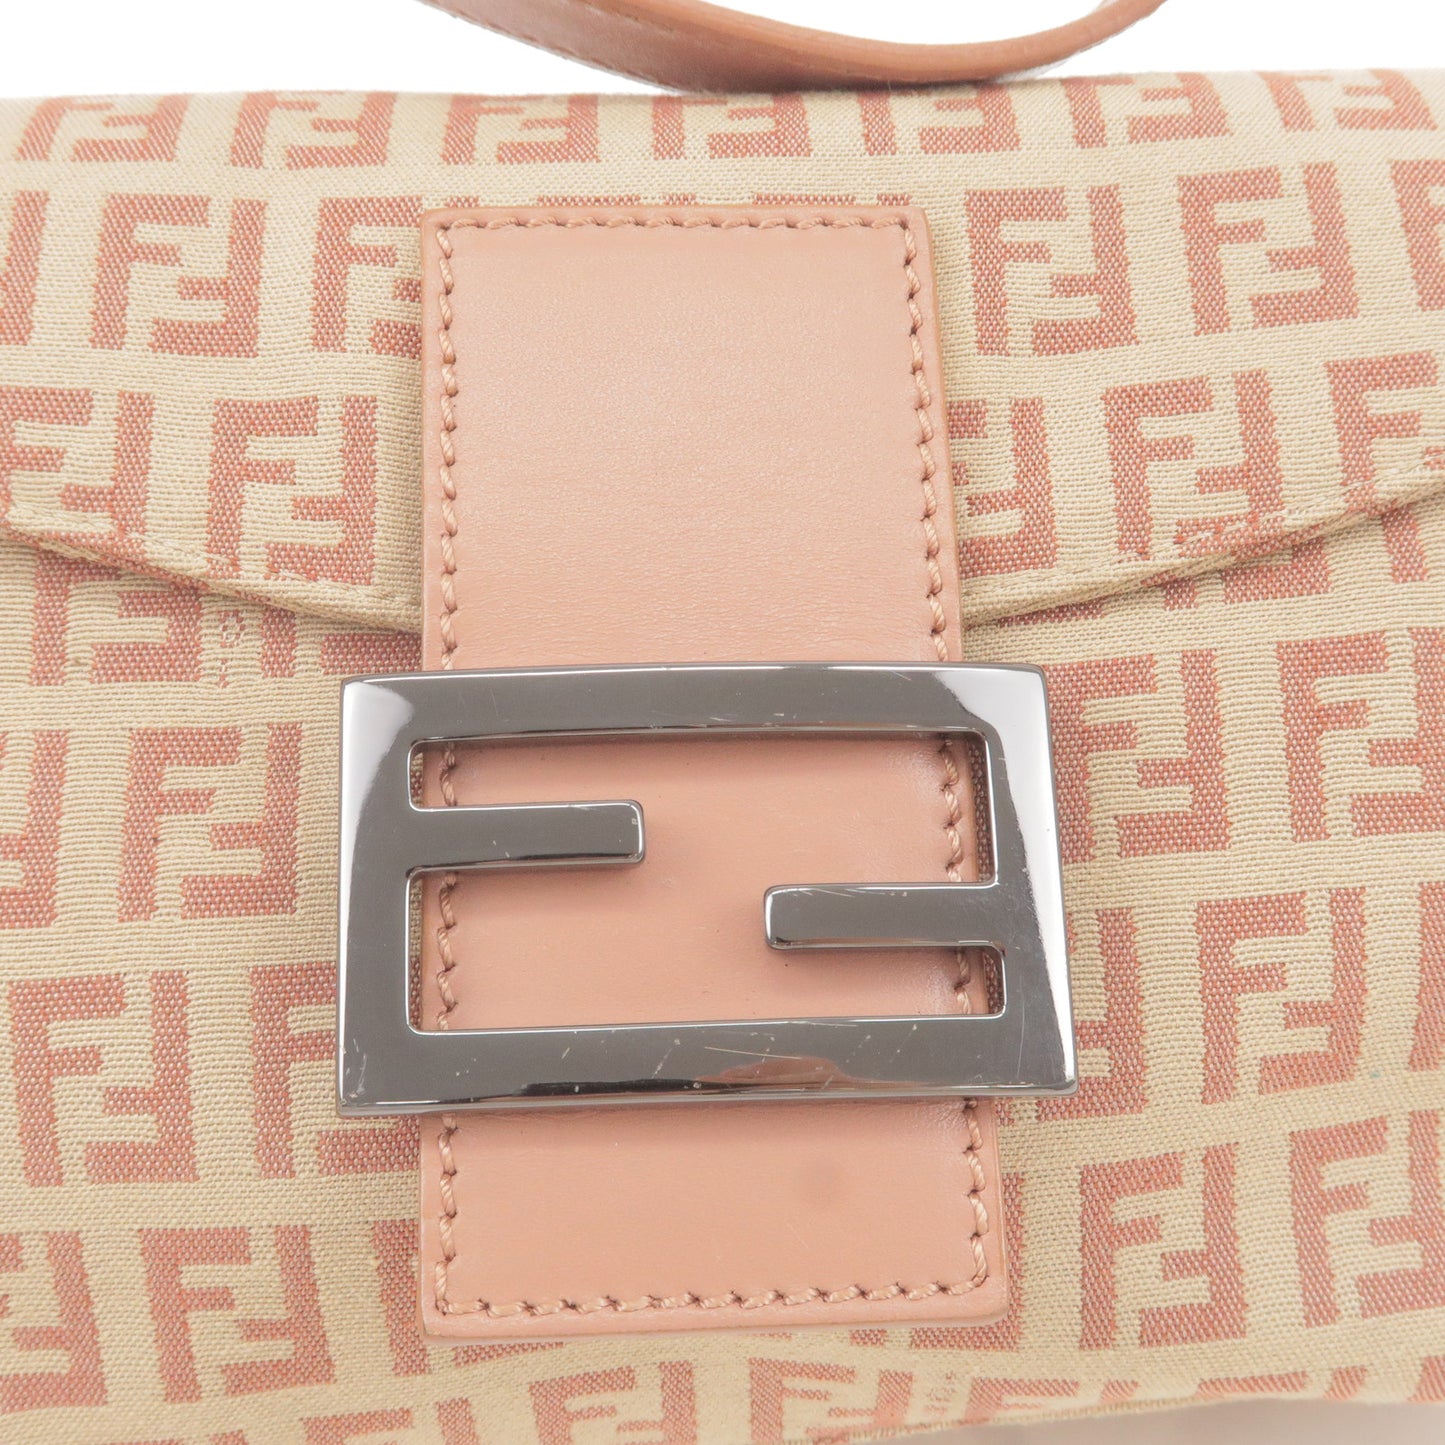 FENDI Zucchino Mamma Baguette Canvas Leather Shoulder Bag 8BR003